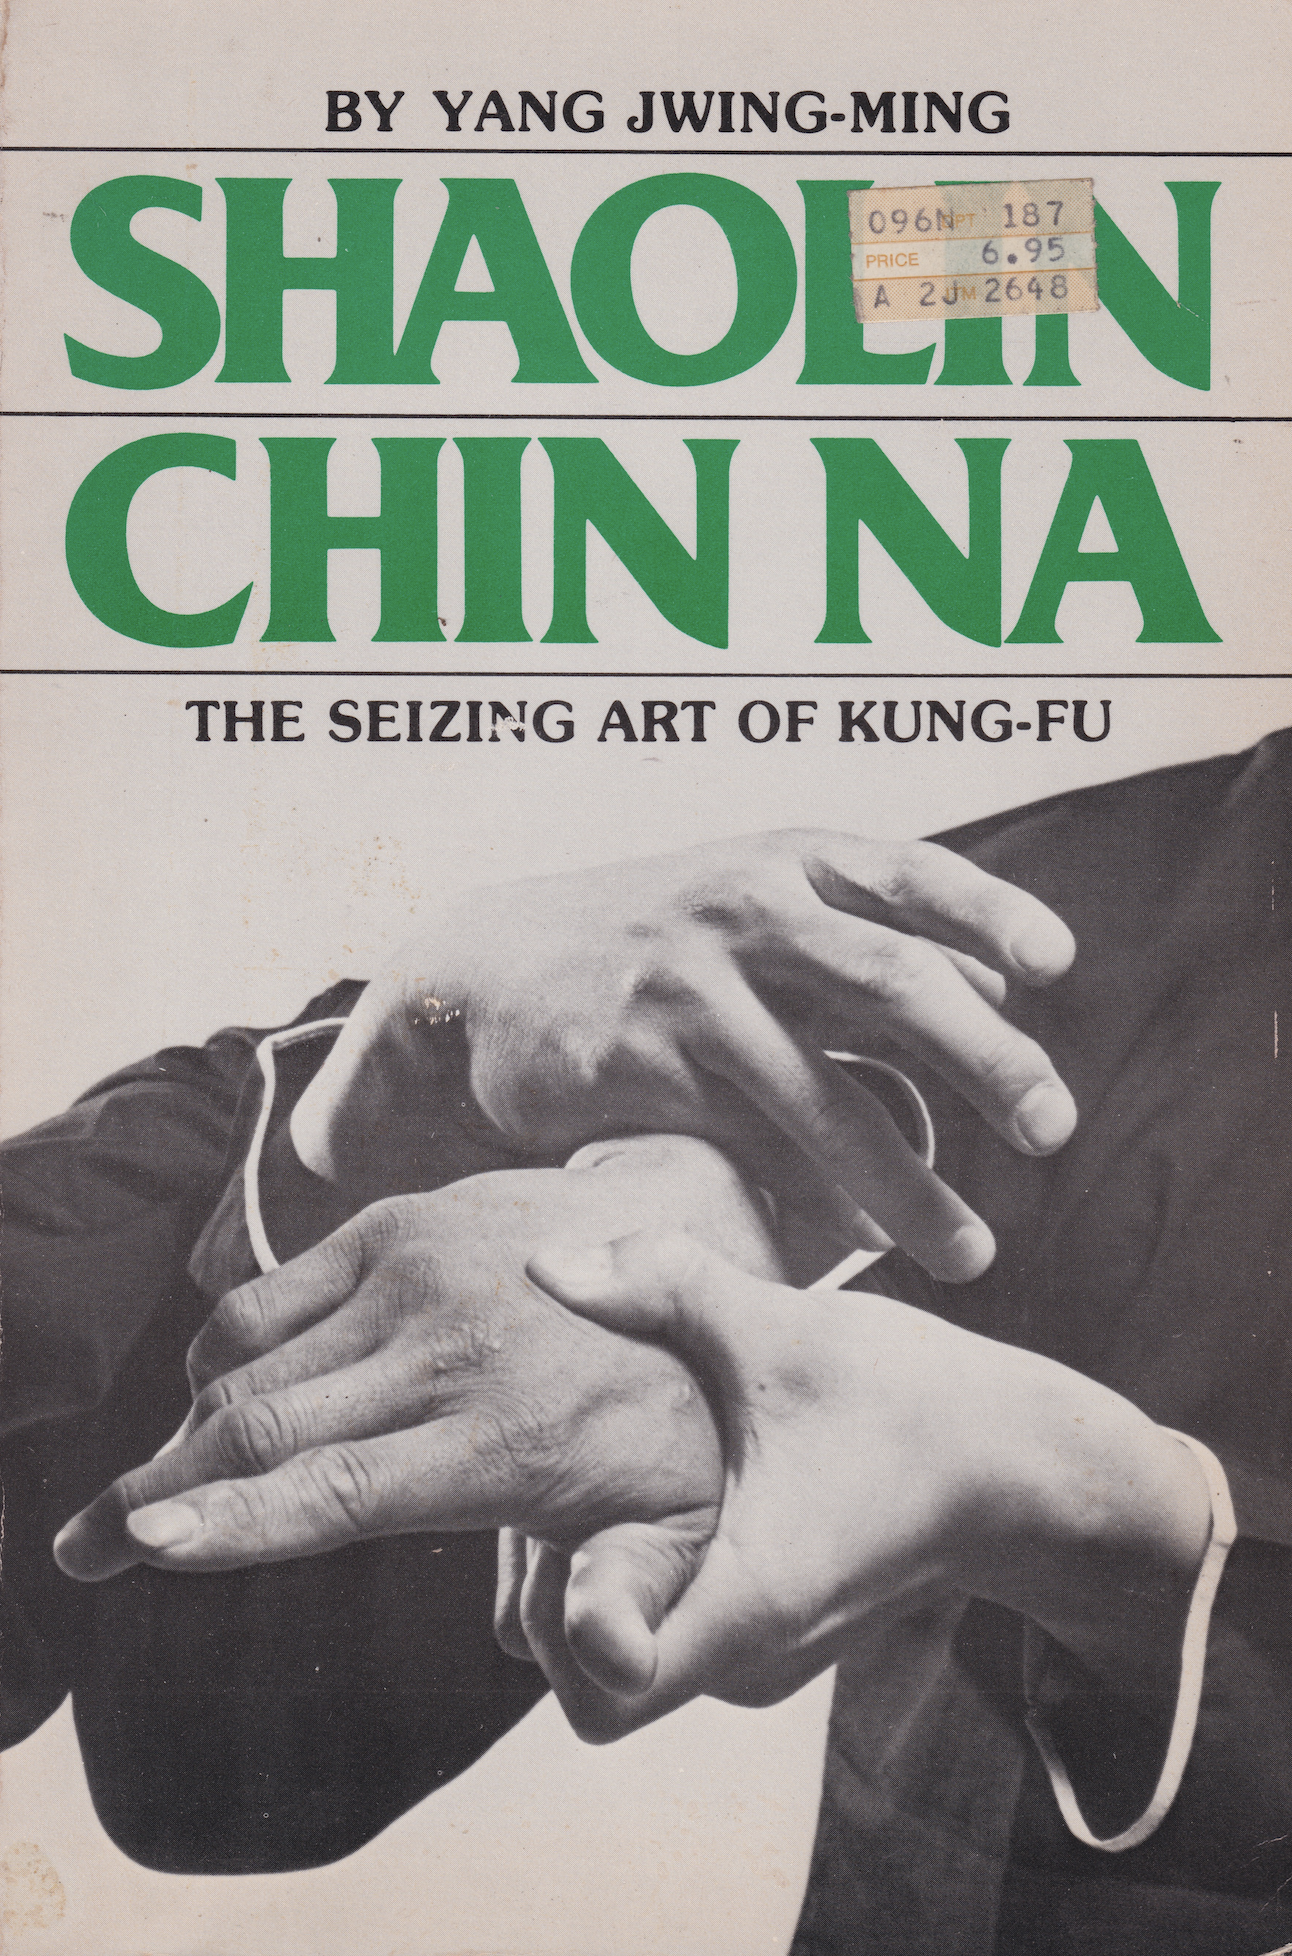 Libro Shaolin Chin Na de Yang Jwing Ming (usado)